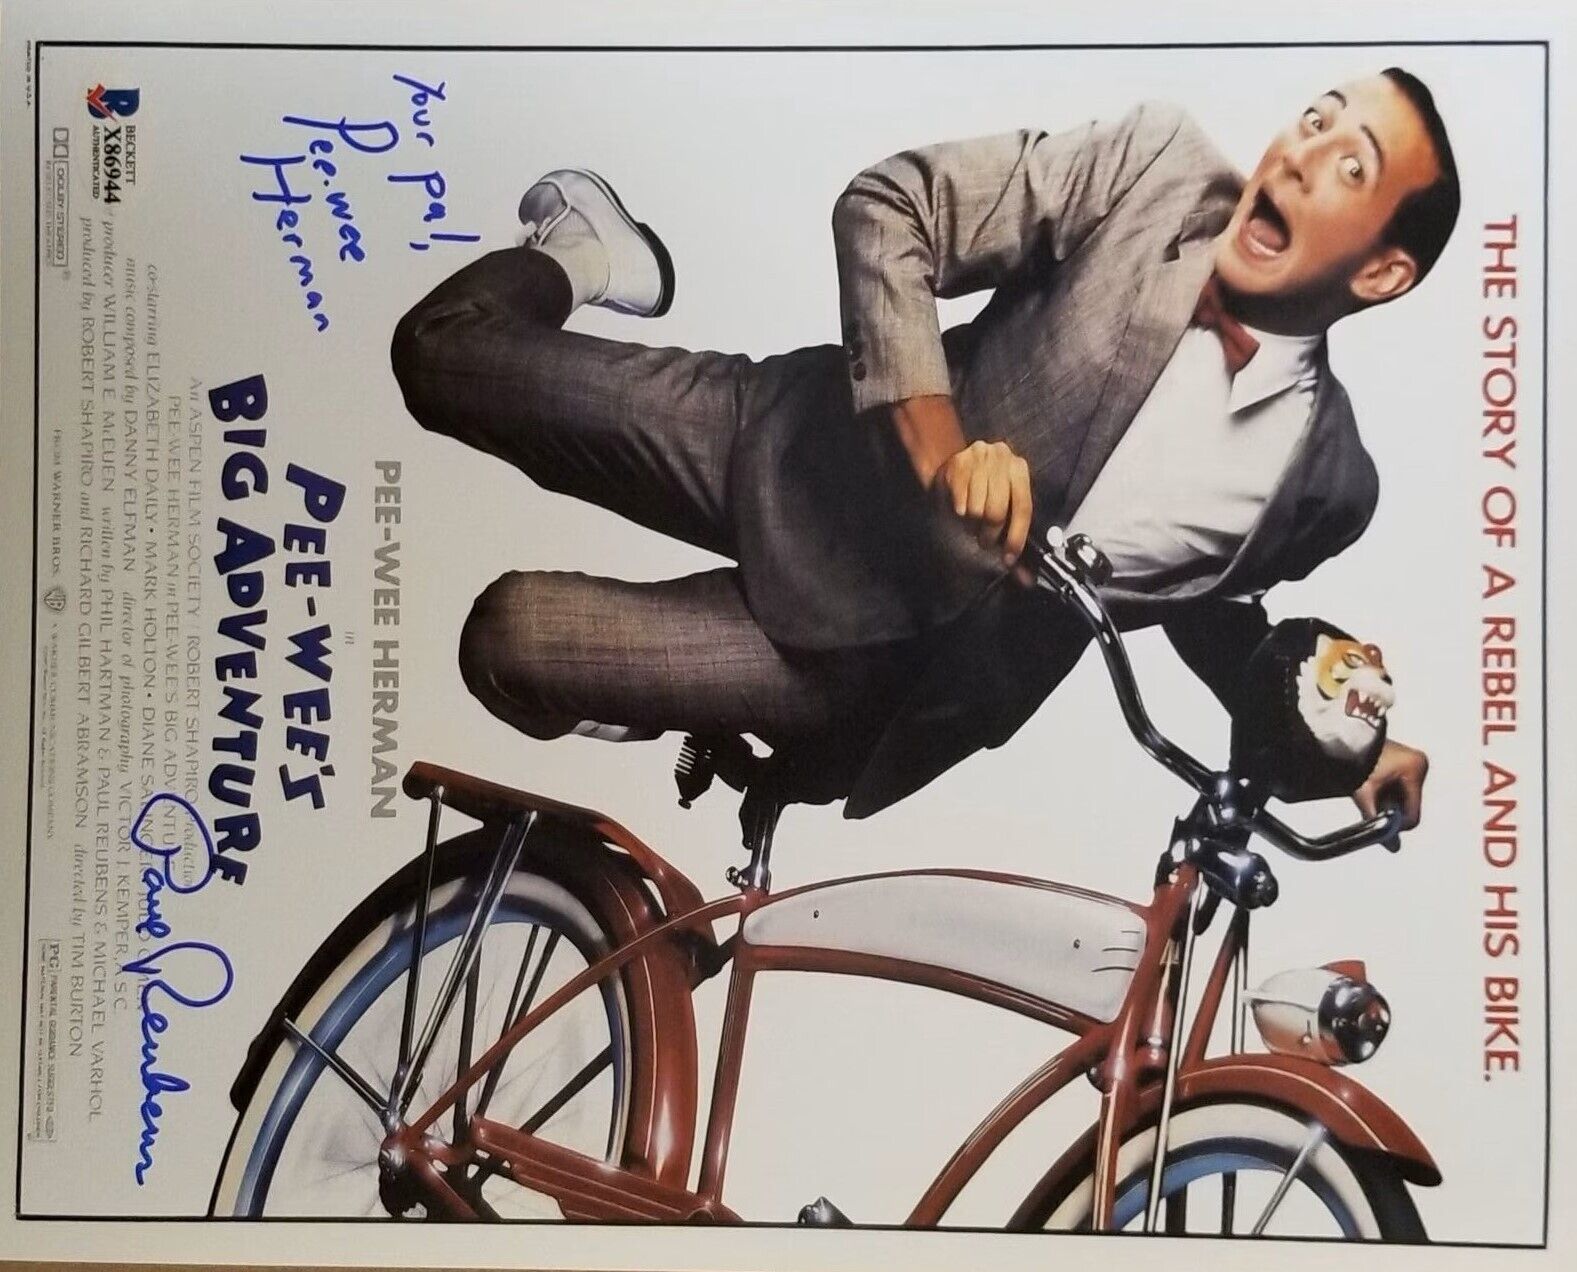 Pee Wee Herman Big Adventure signed copy 8x10 photo Rare Paul Reubens